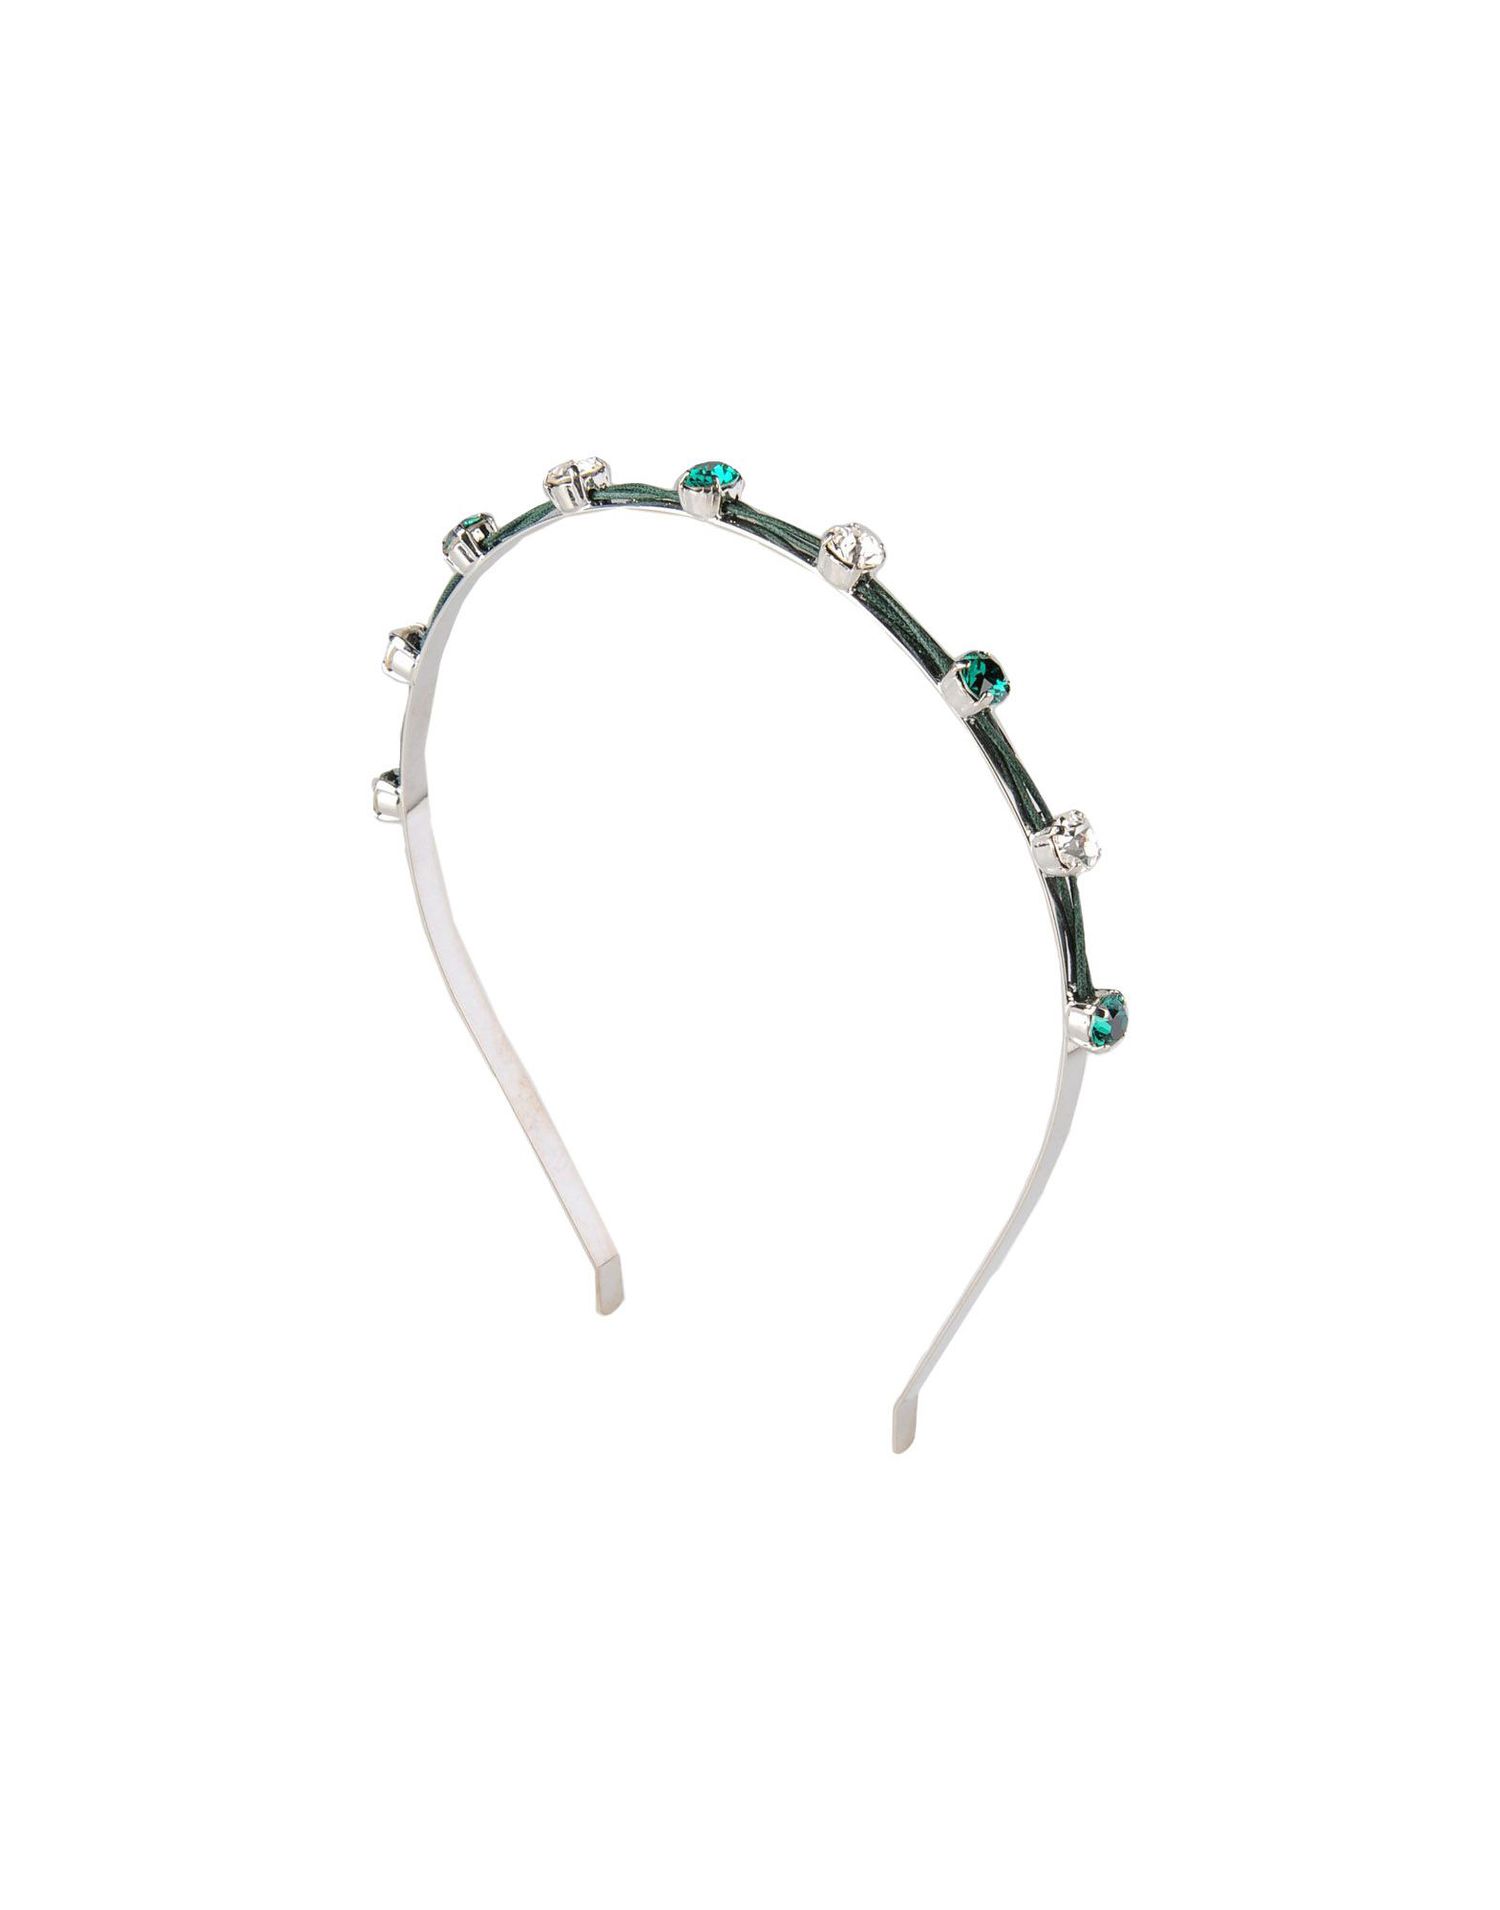 jeweled headband